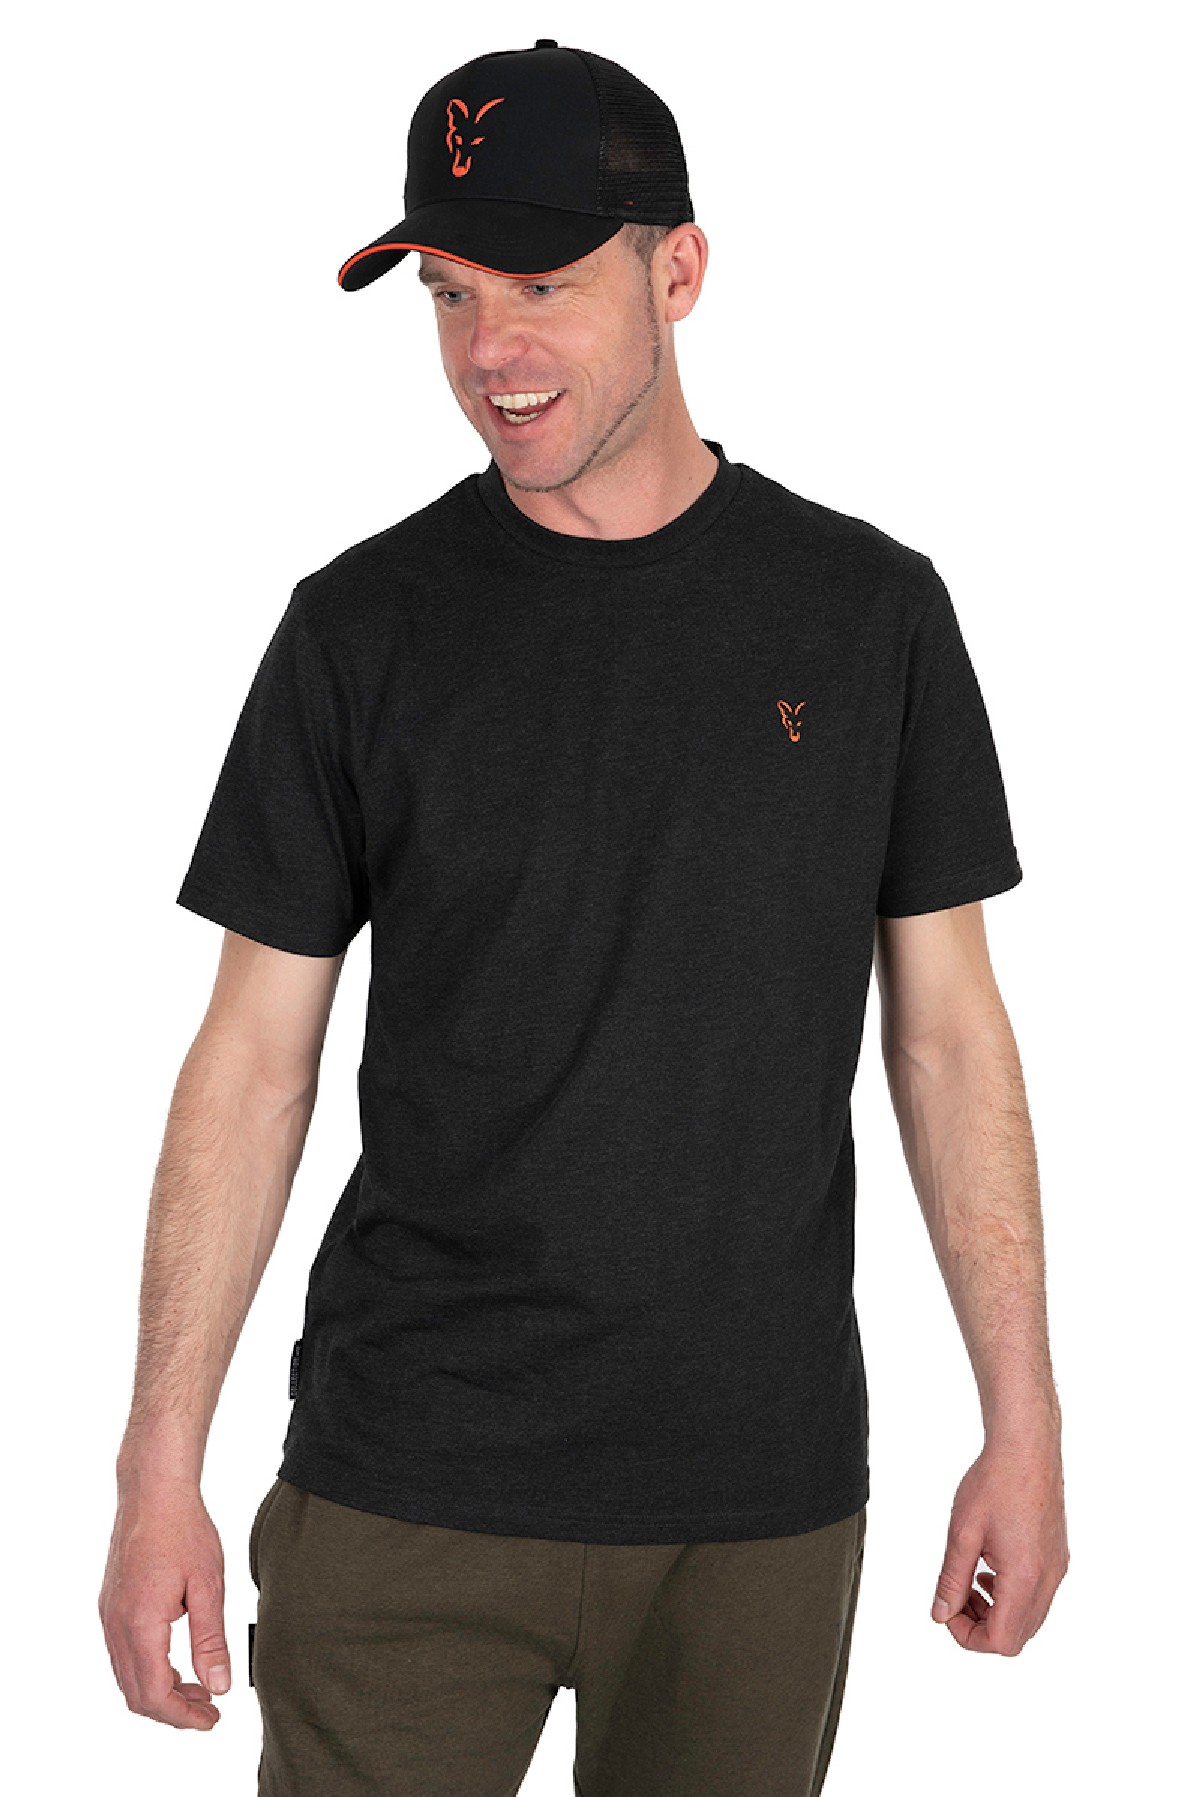 Fox Collection T-Shirt Black & Orange Large